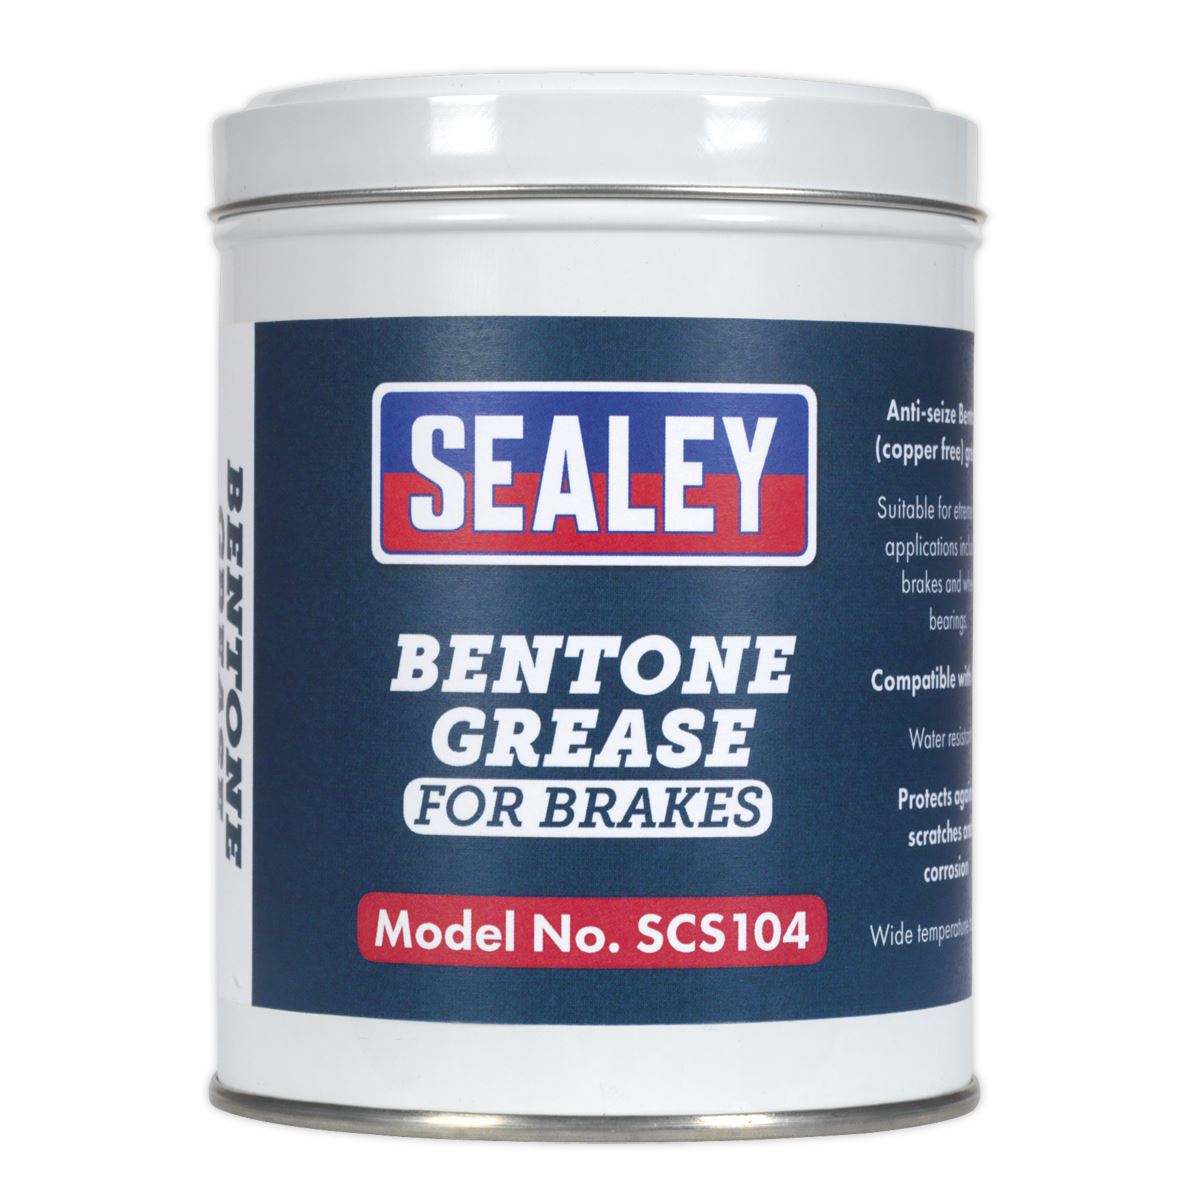 Sealey Bentone Grease for Brakes 500g Tin